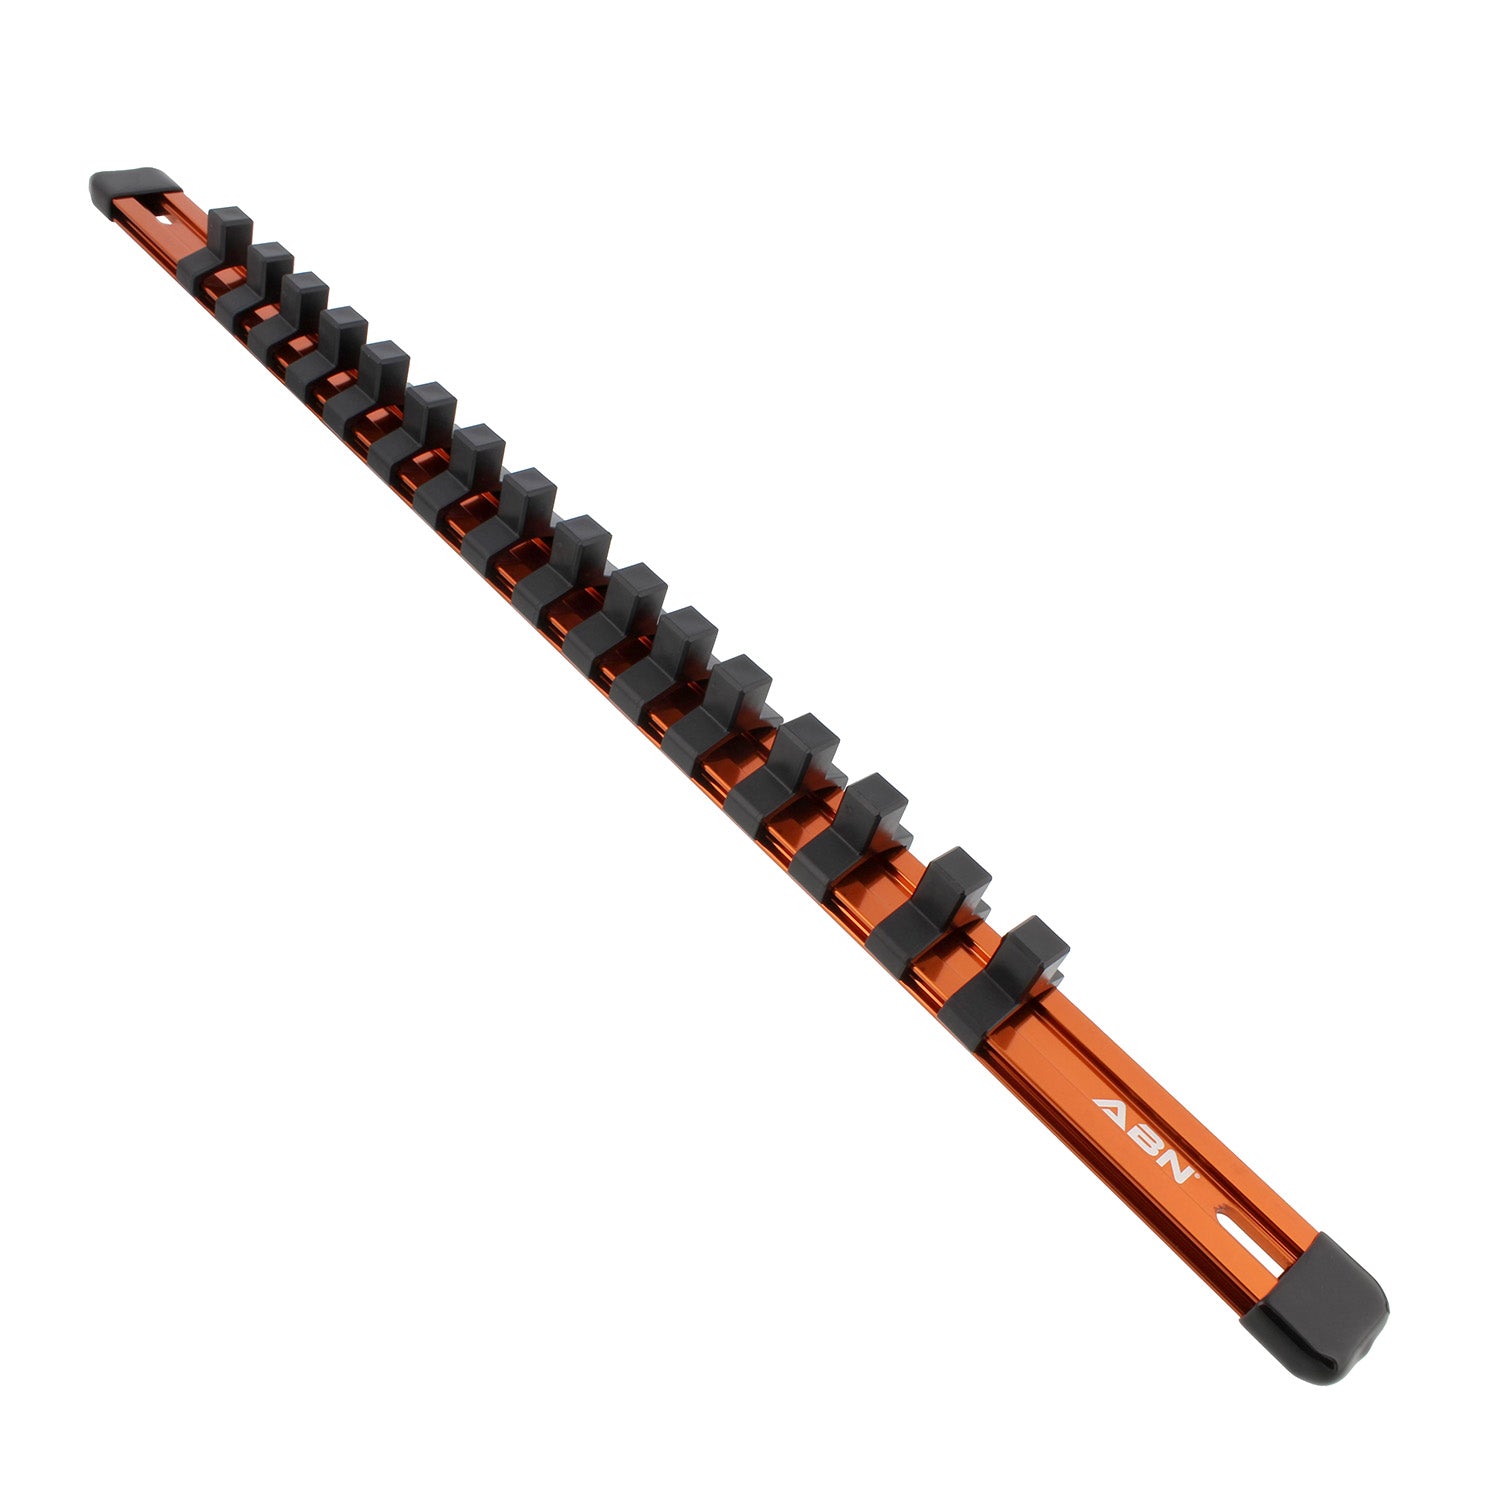 Orange Aluminum SAE 3/8” Socket Organizer Tool Holder Rail and Clips